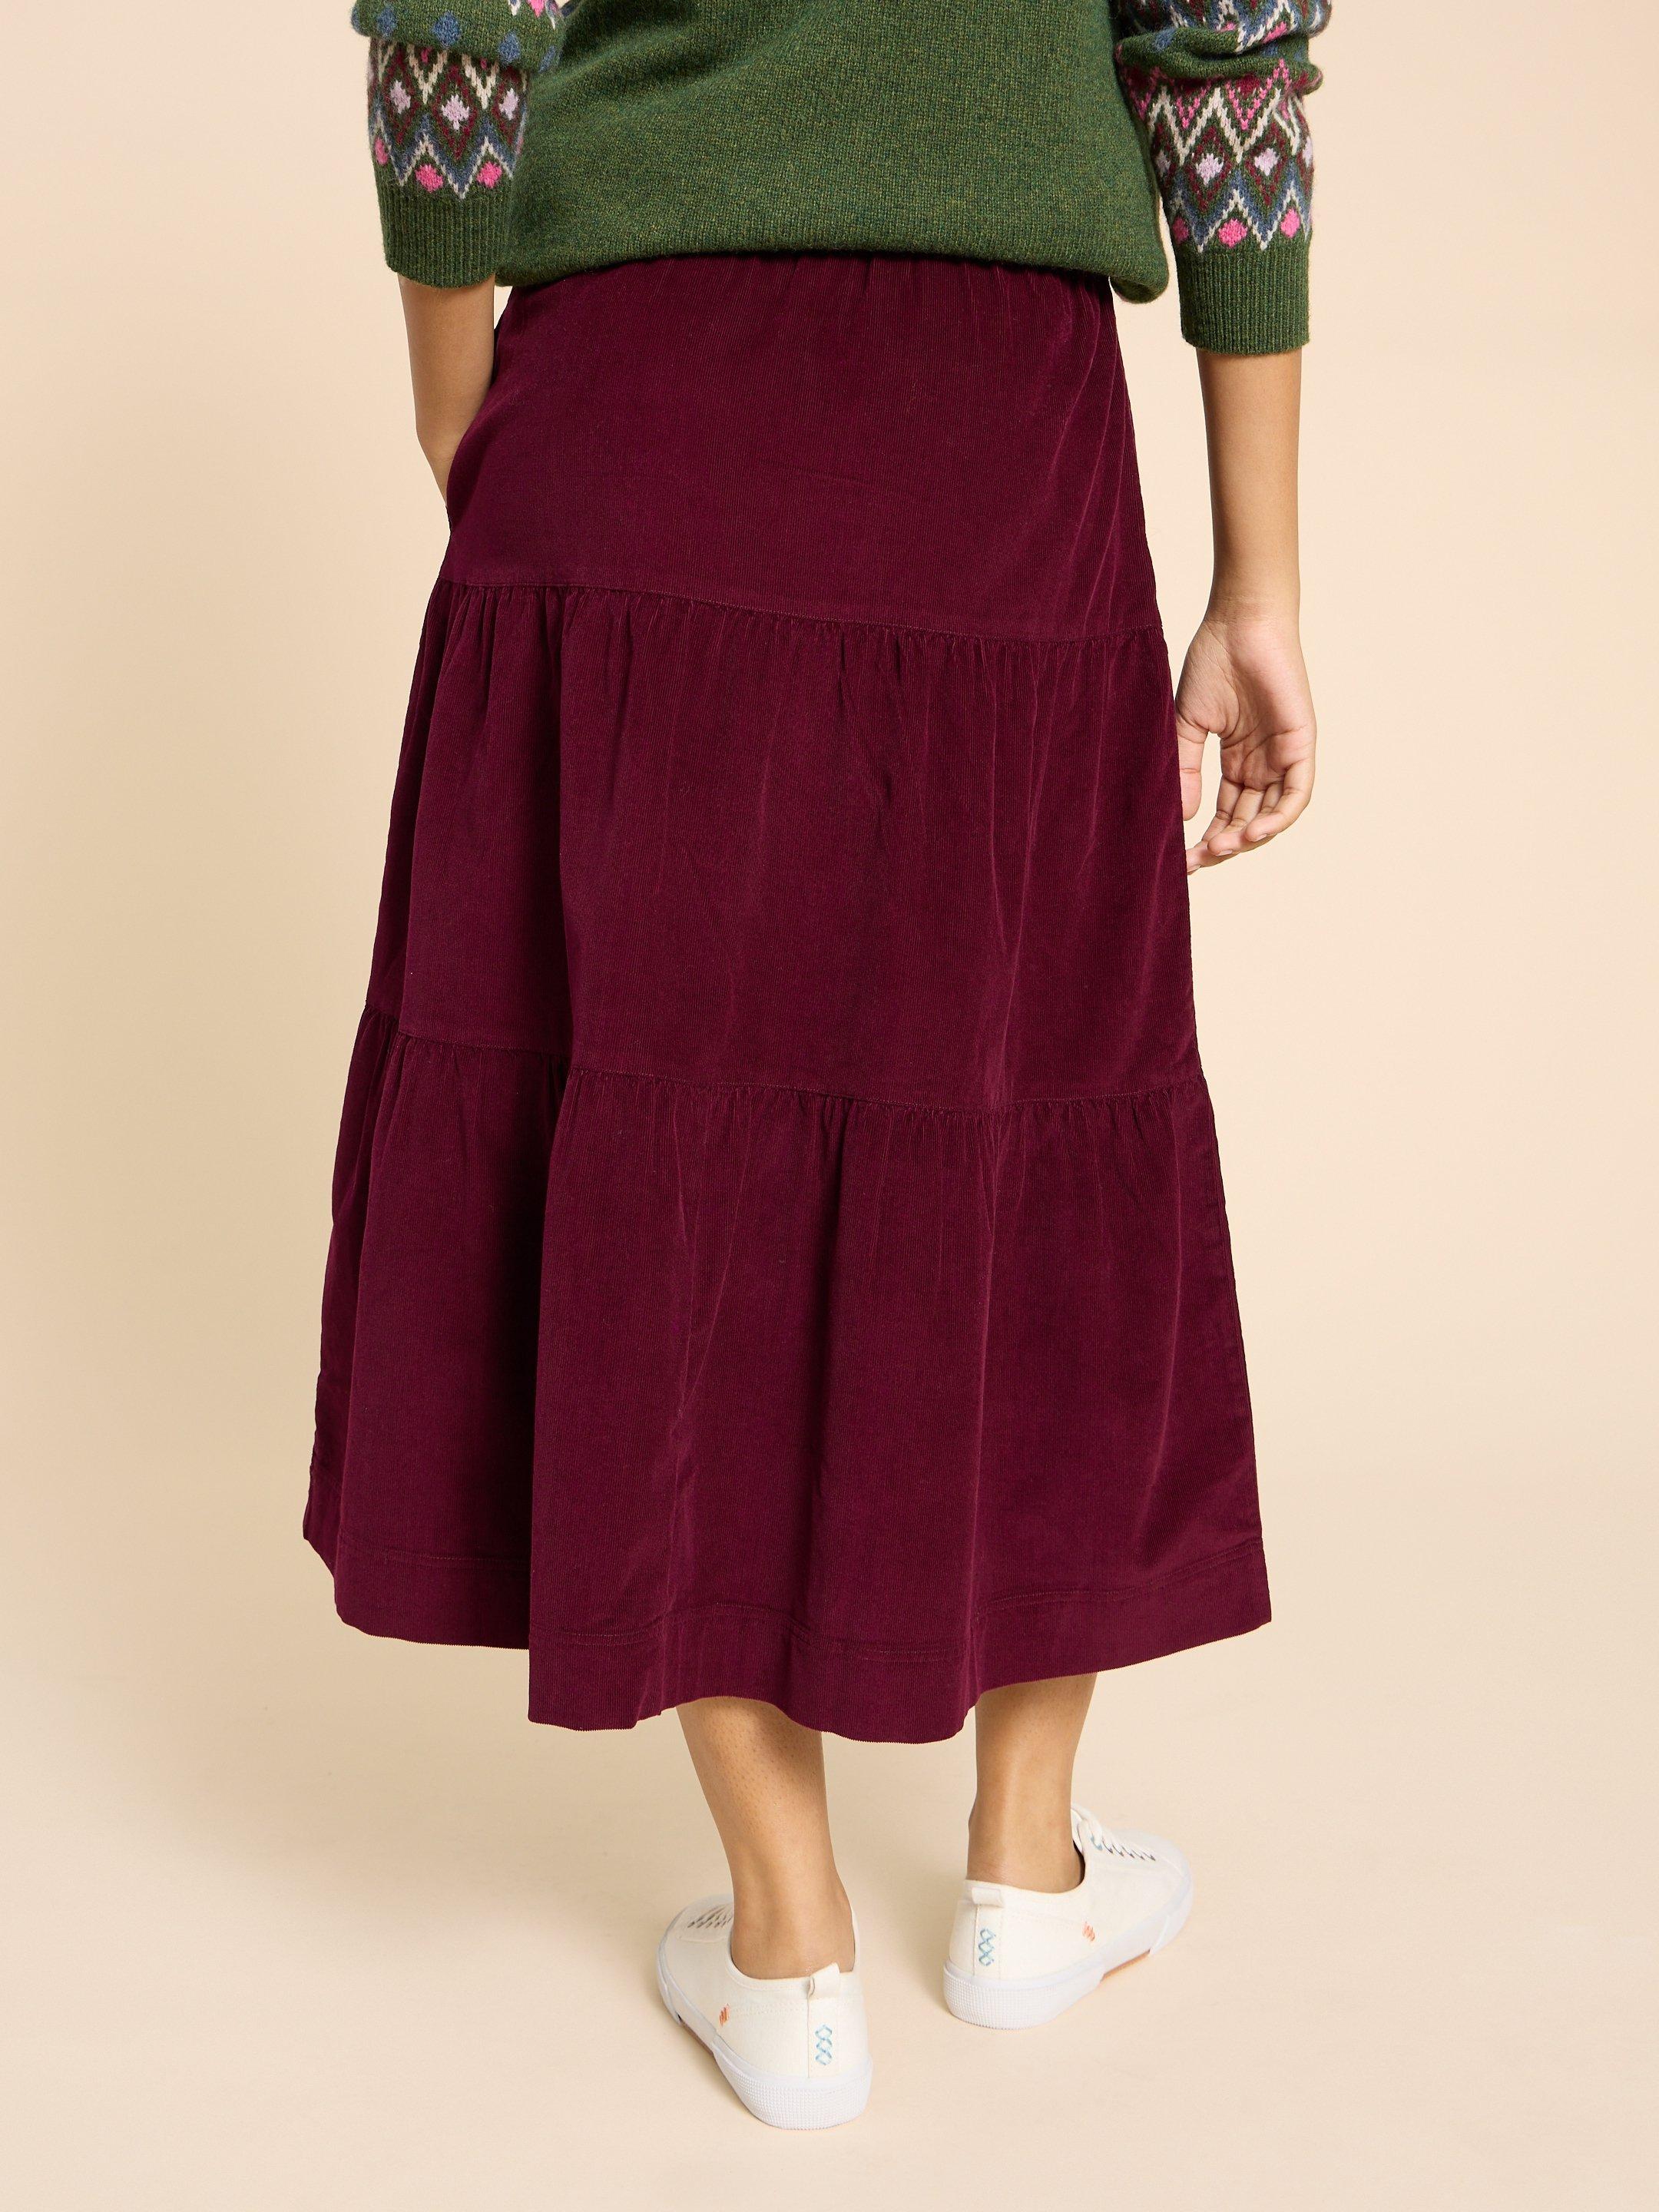 Jade Tiered Cord Skirt in DK PLUM - MODEL BACK